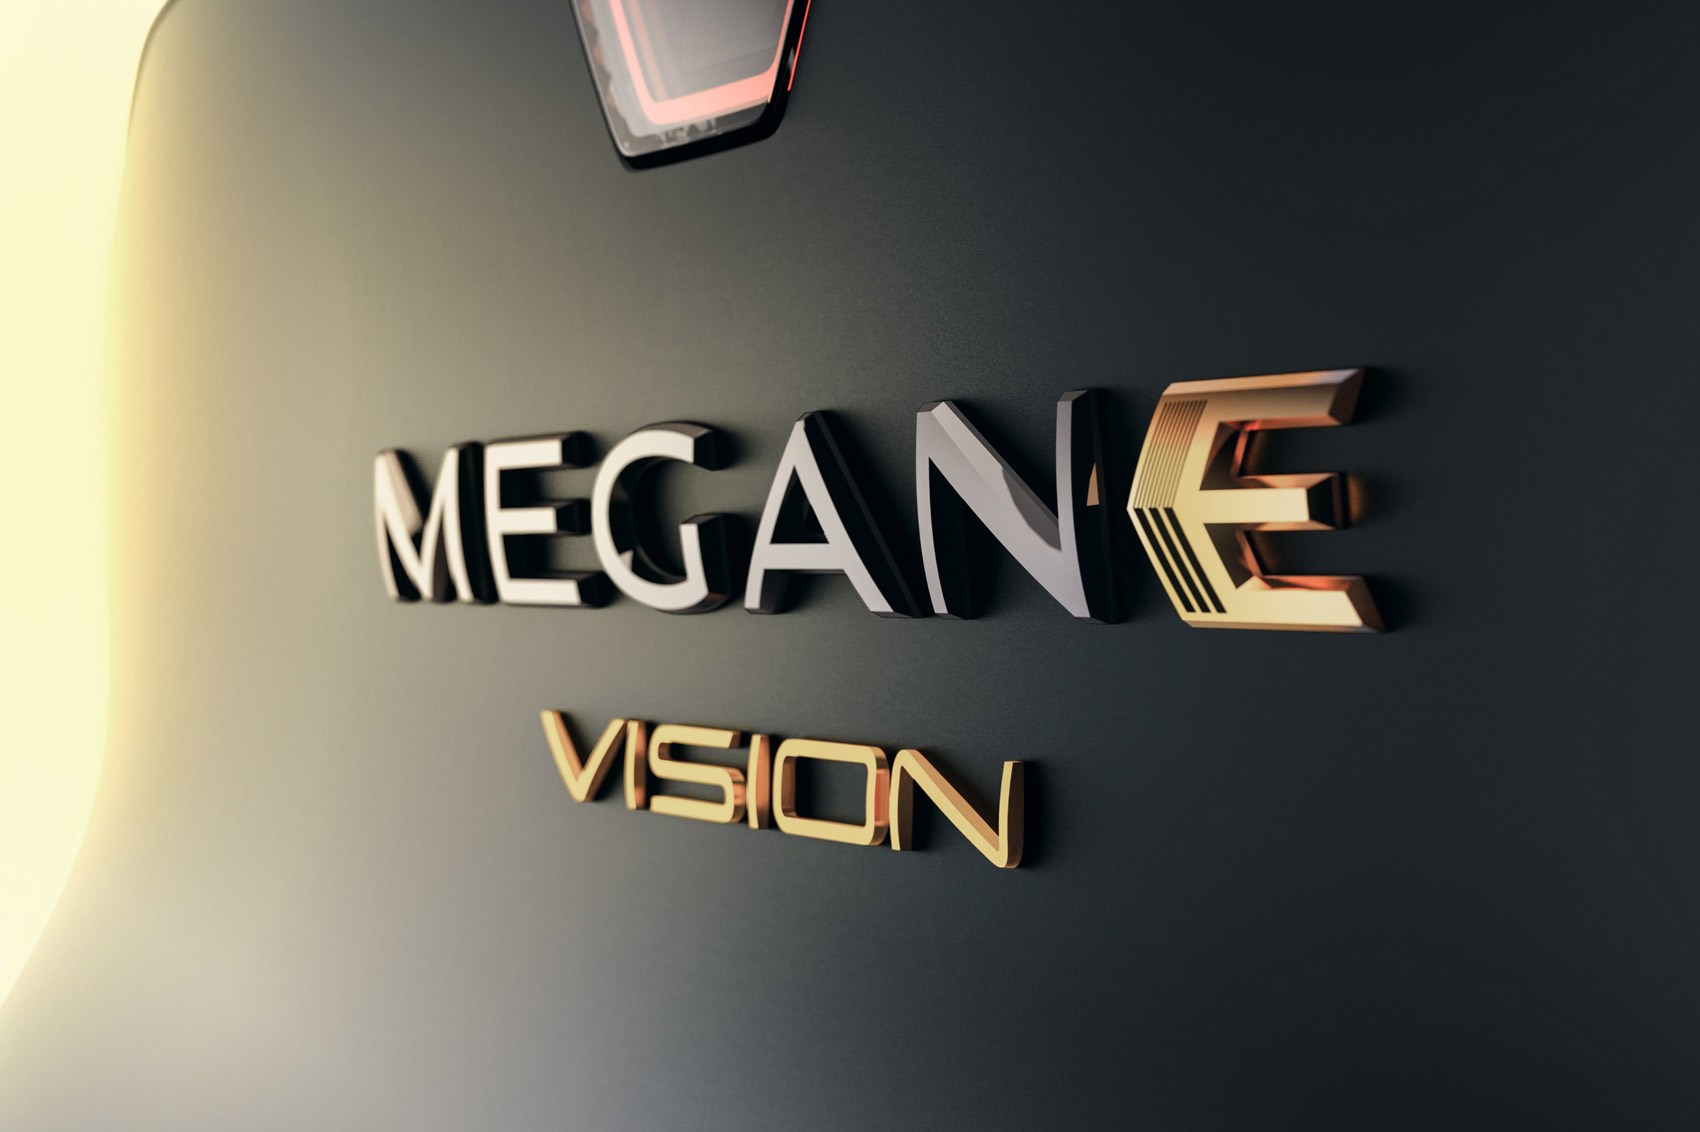 Renault Megane eVision Concept Signals Future Of Brand's EVs